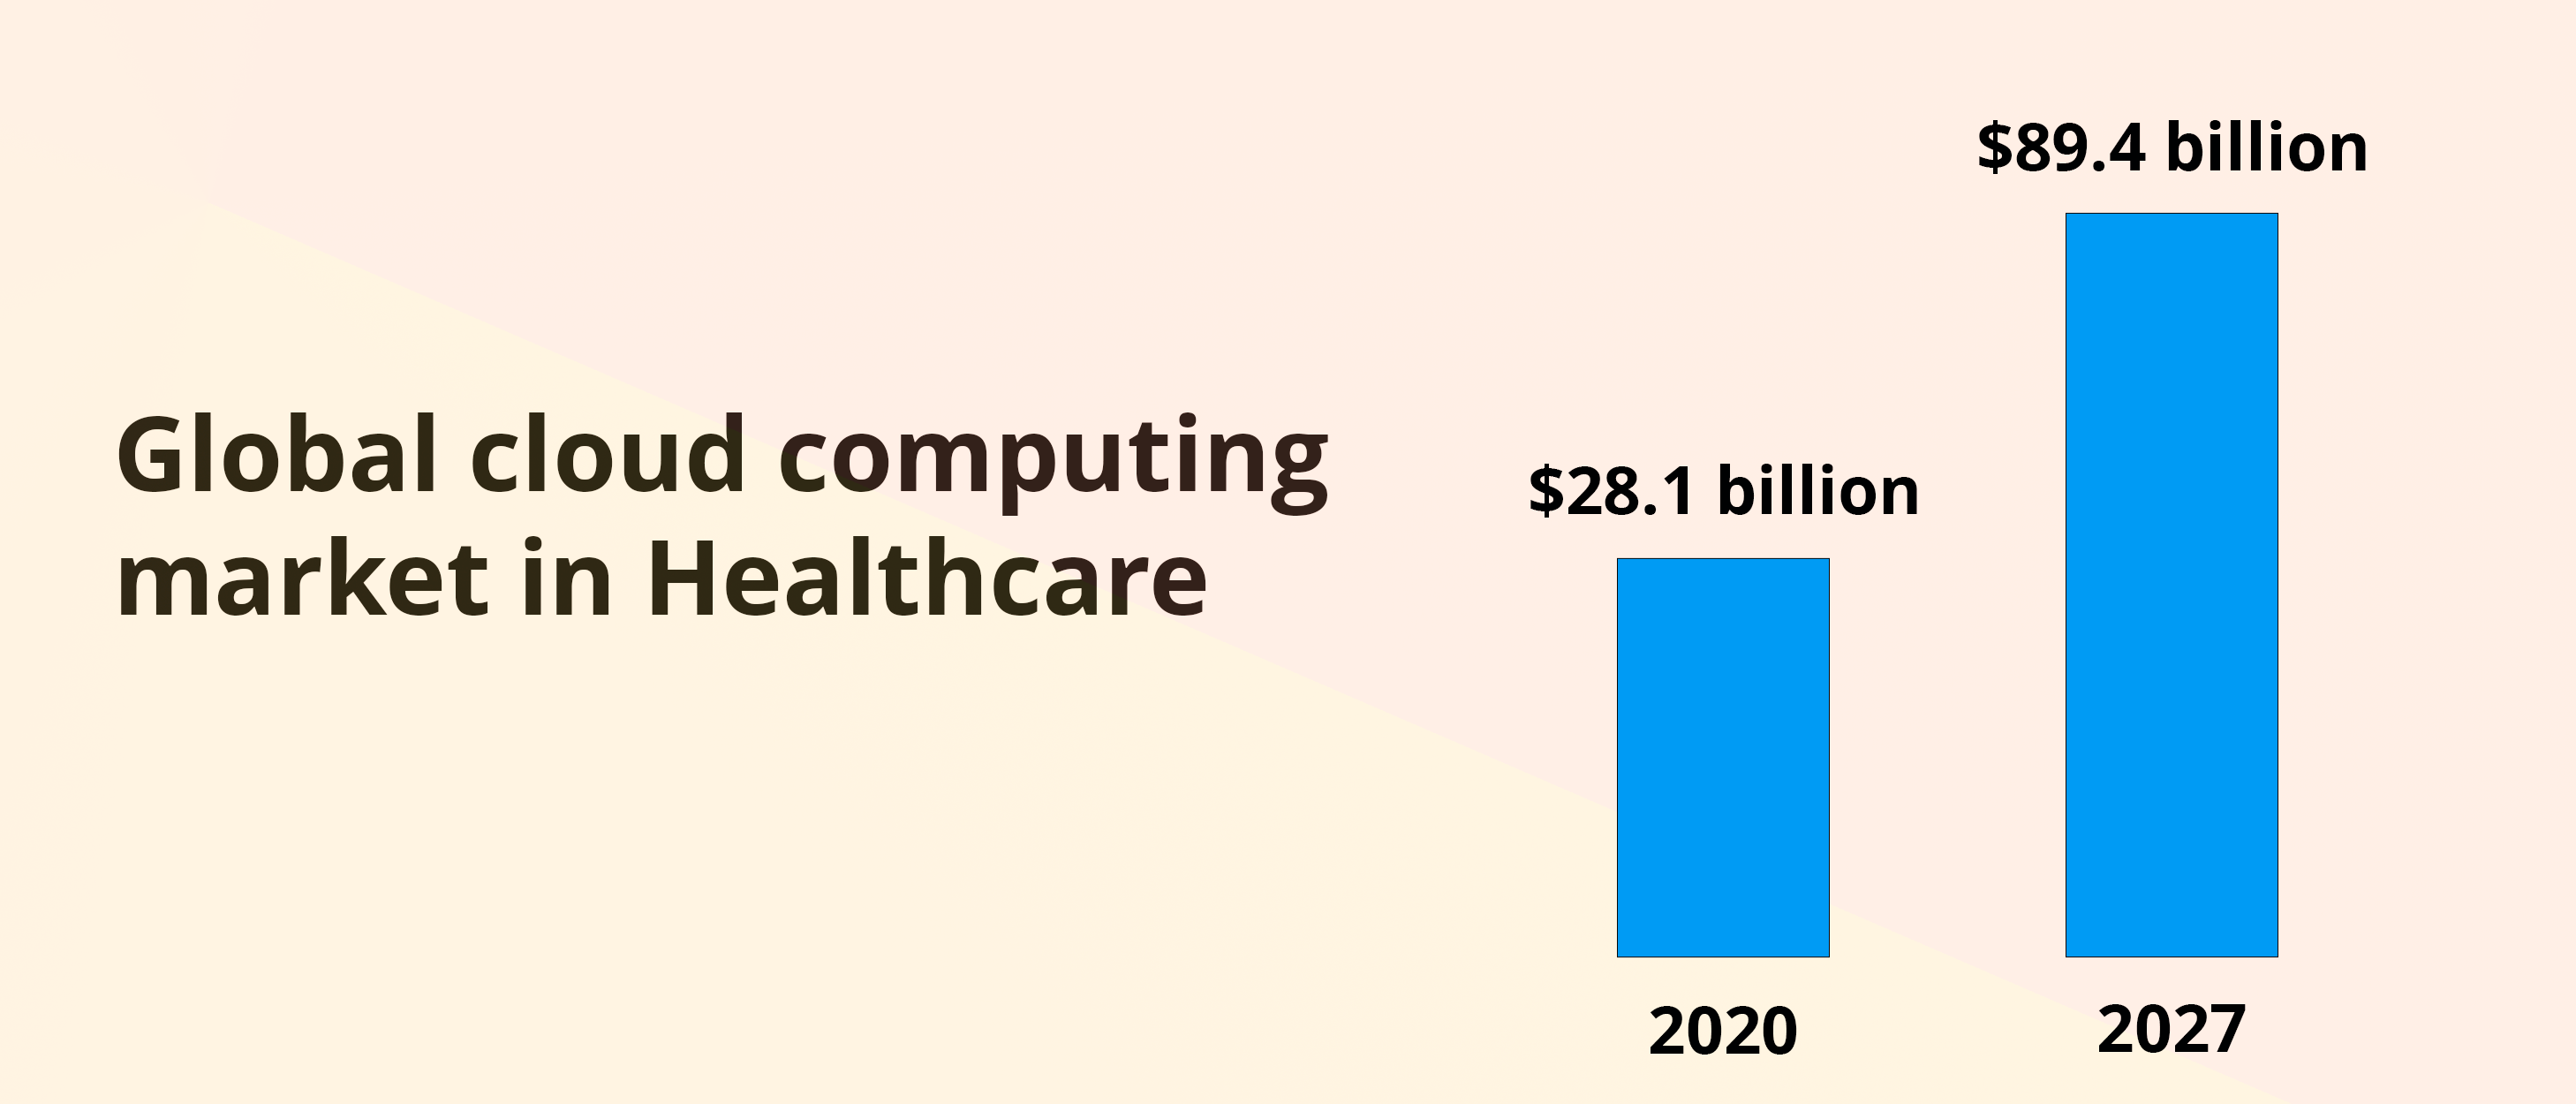 Cloud computing market in healthcare